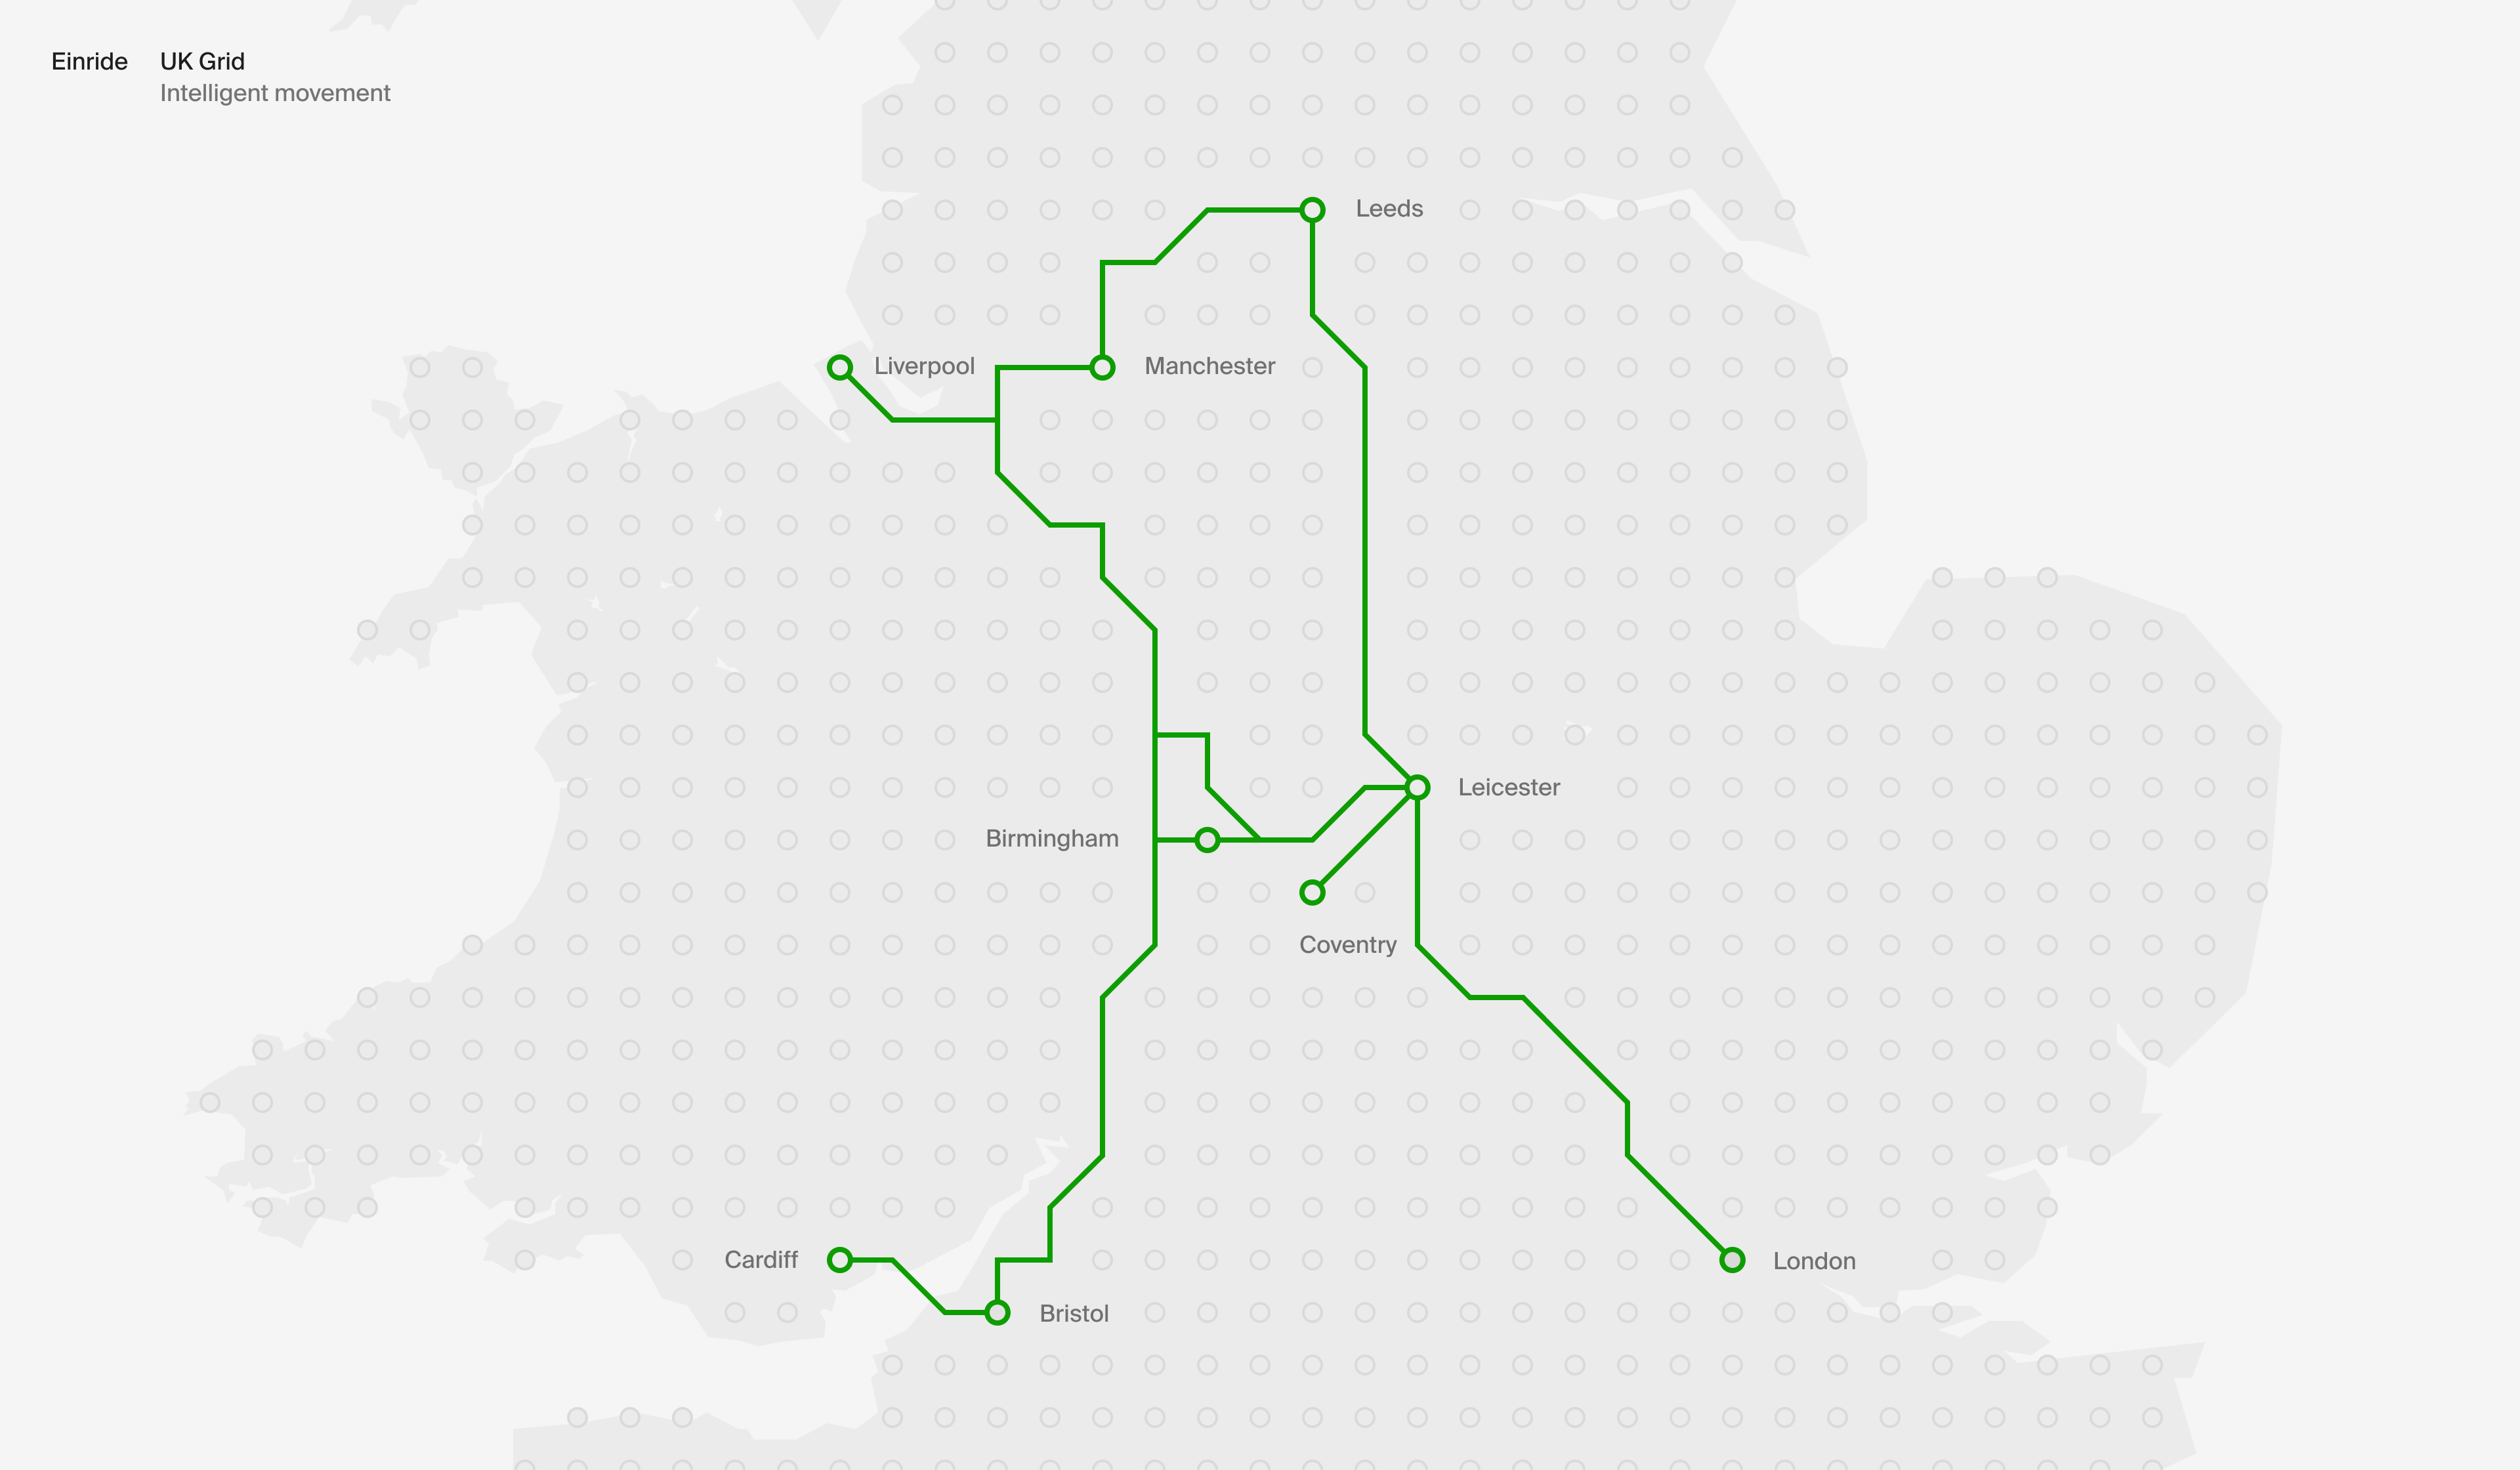 Einride's planned transport network grid